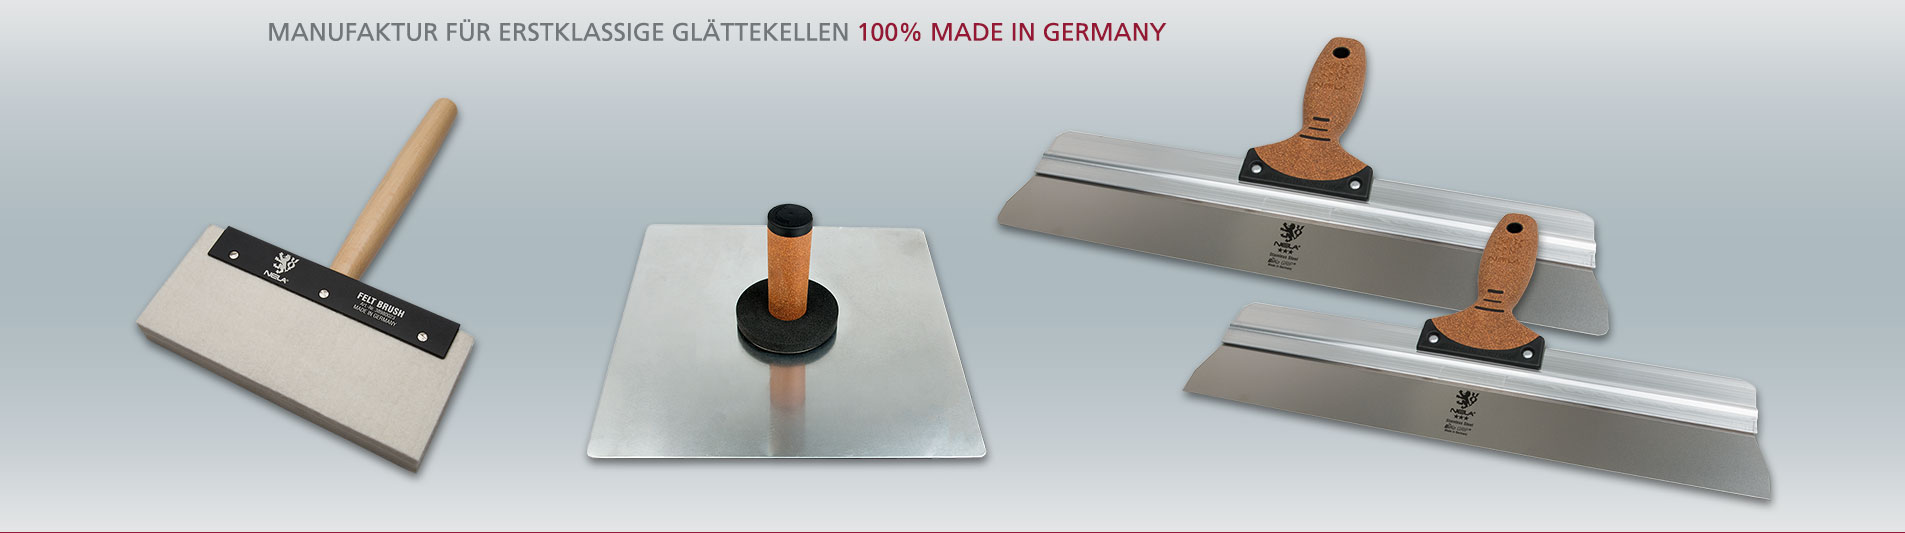 NELA Premium Alu-Rakel BiKoGRIFF Kork 300mm rostfrei Flächenspachtel Malerspachtel 100% Made in Germany